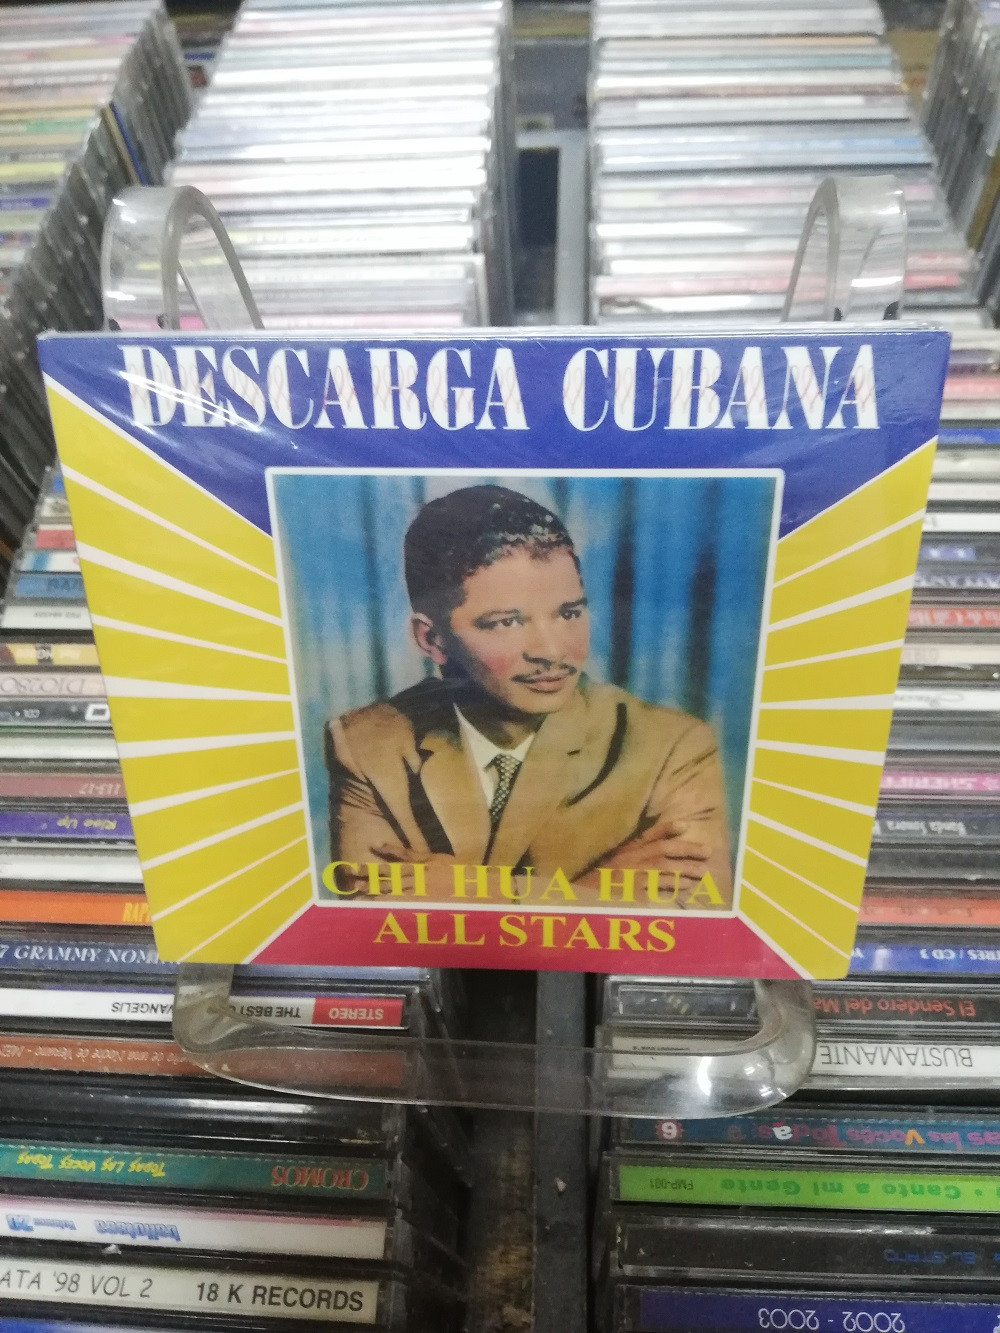 Imagen CD CHI HUA HUA ALL STARS - DESCARGA CUBANA